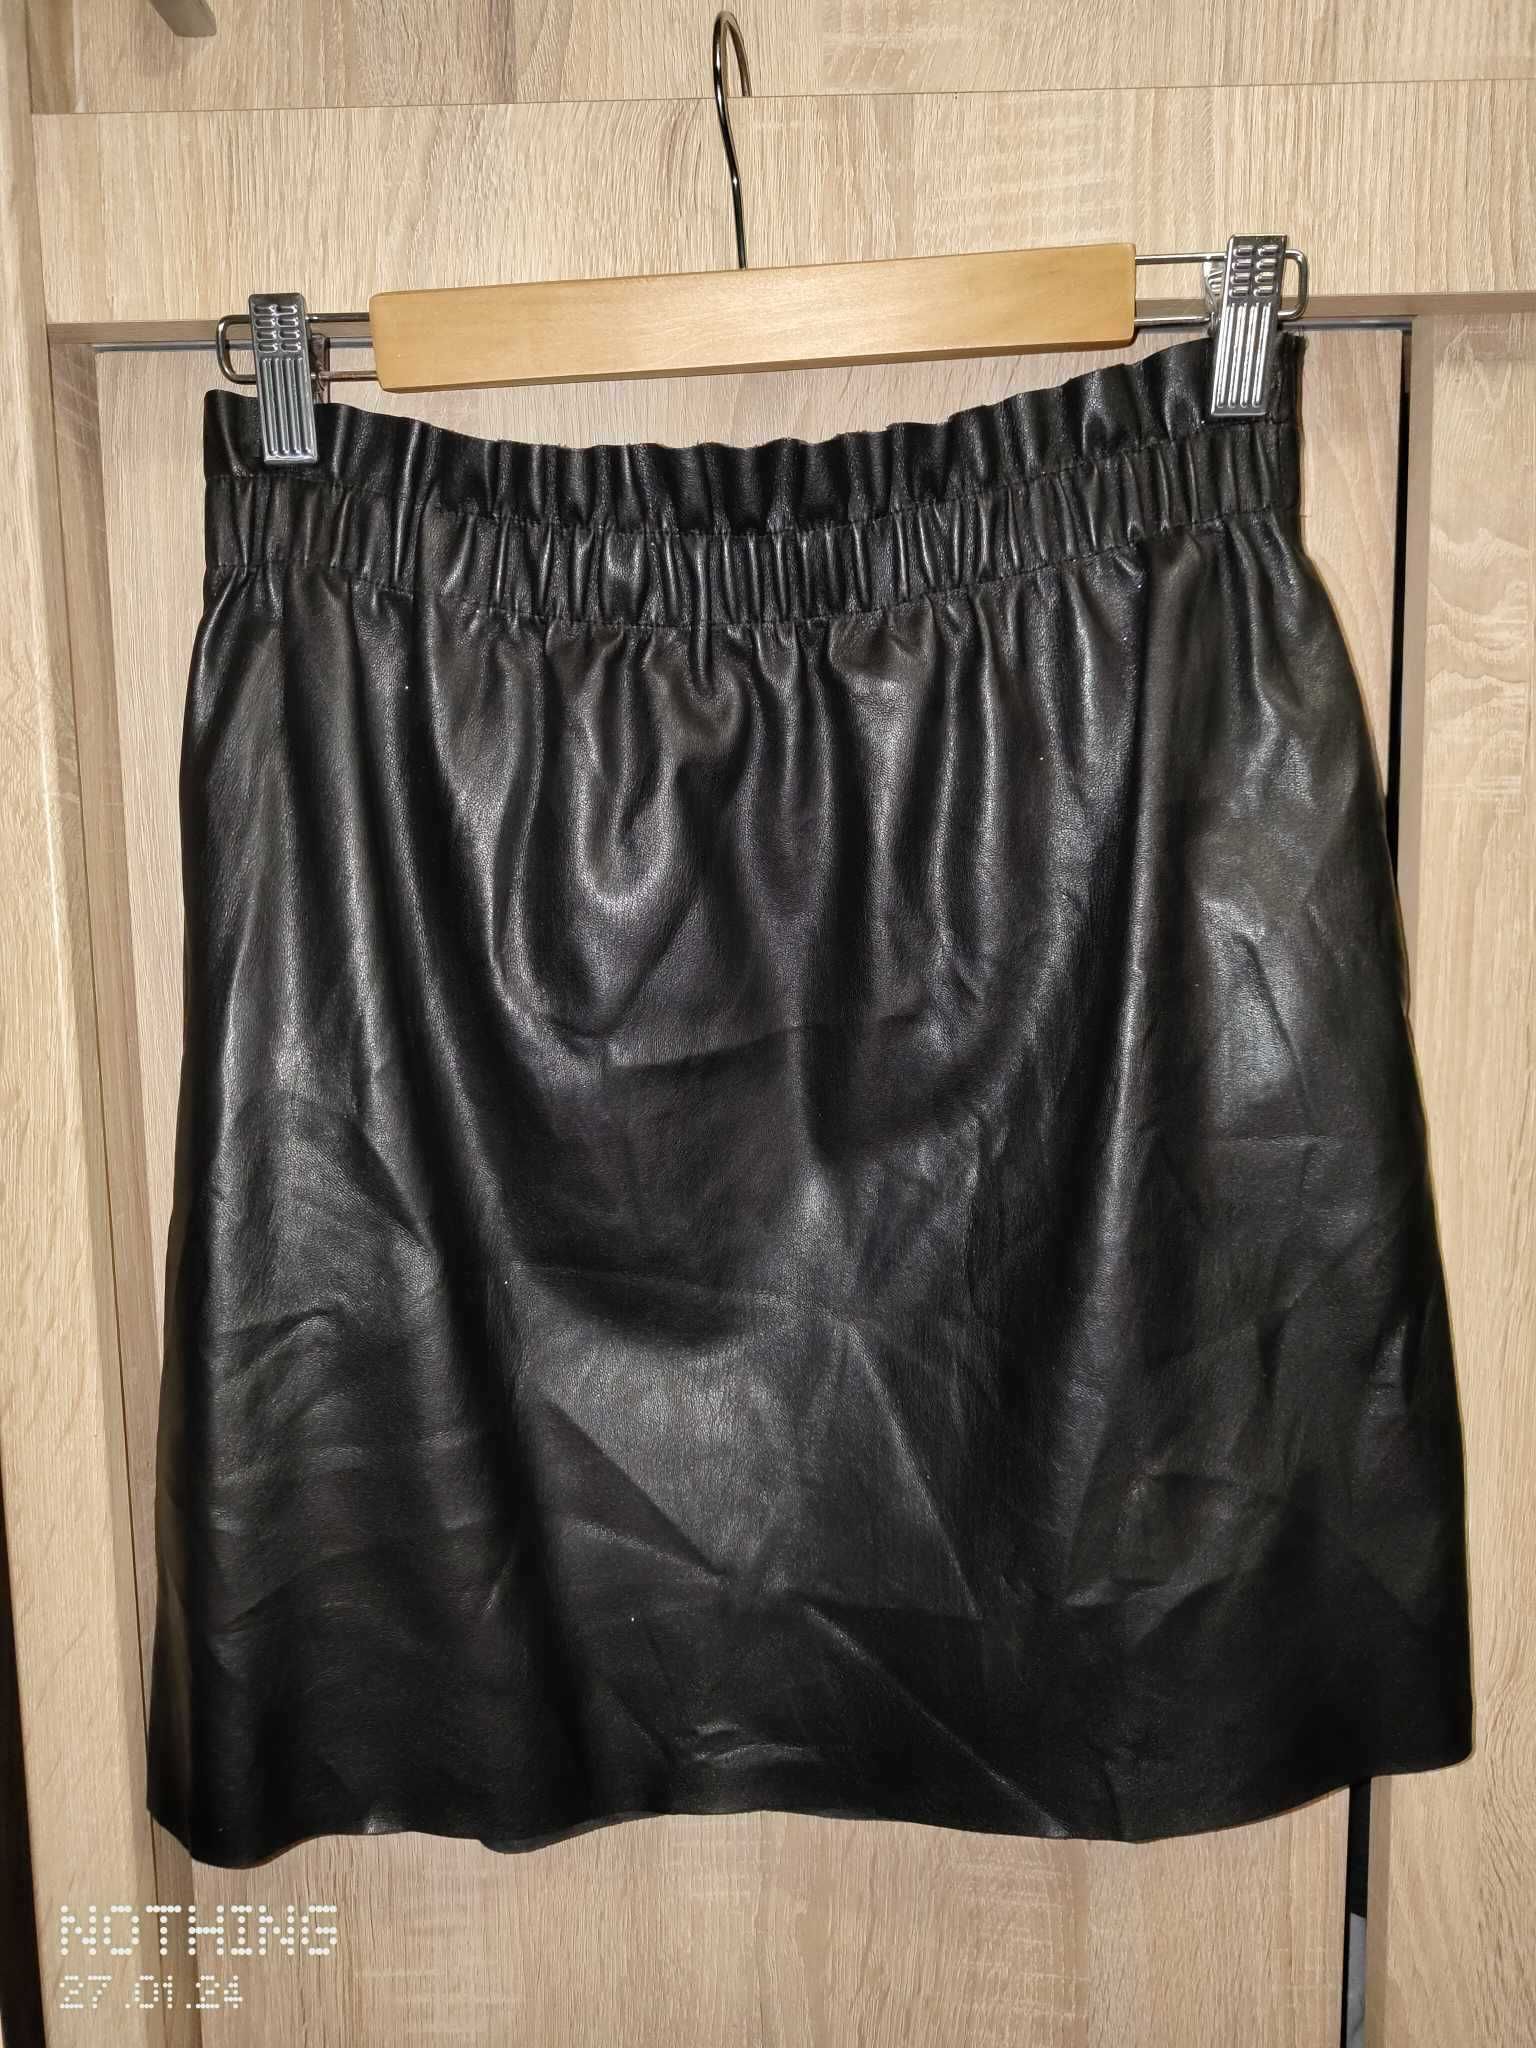 Zara Knit Black Faux Leather Skirt